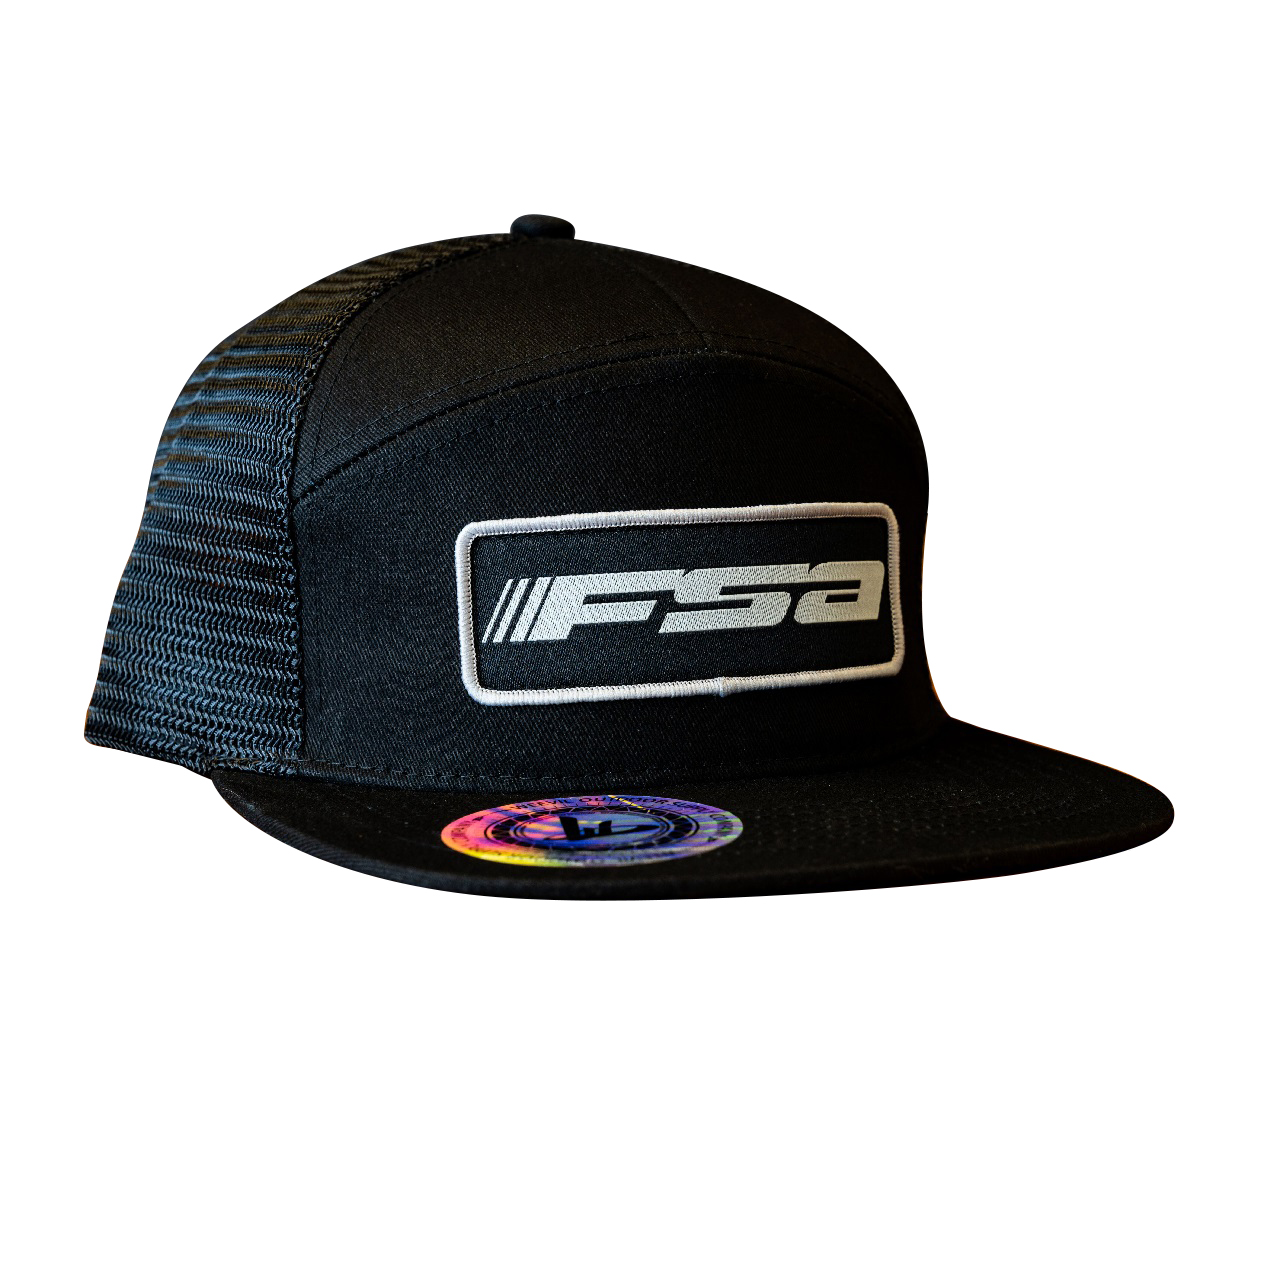 FSA 5 Panel Trucker Style Hat Black Adjustable